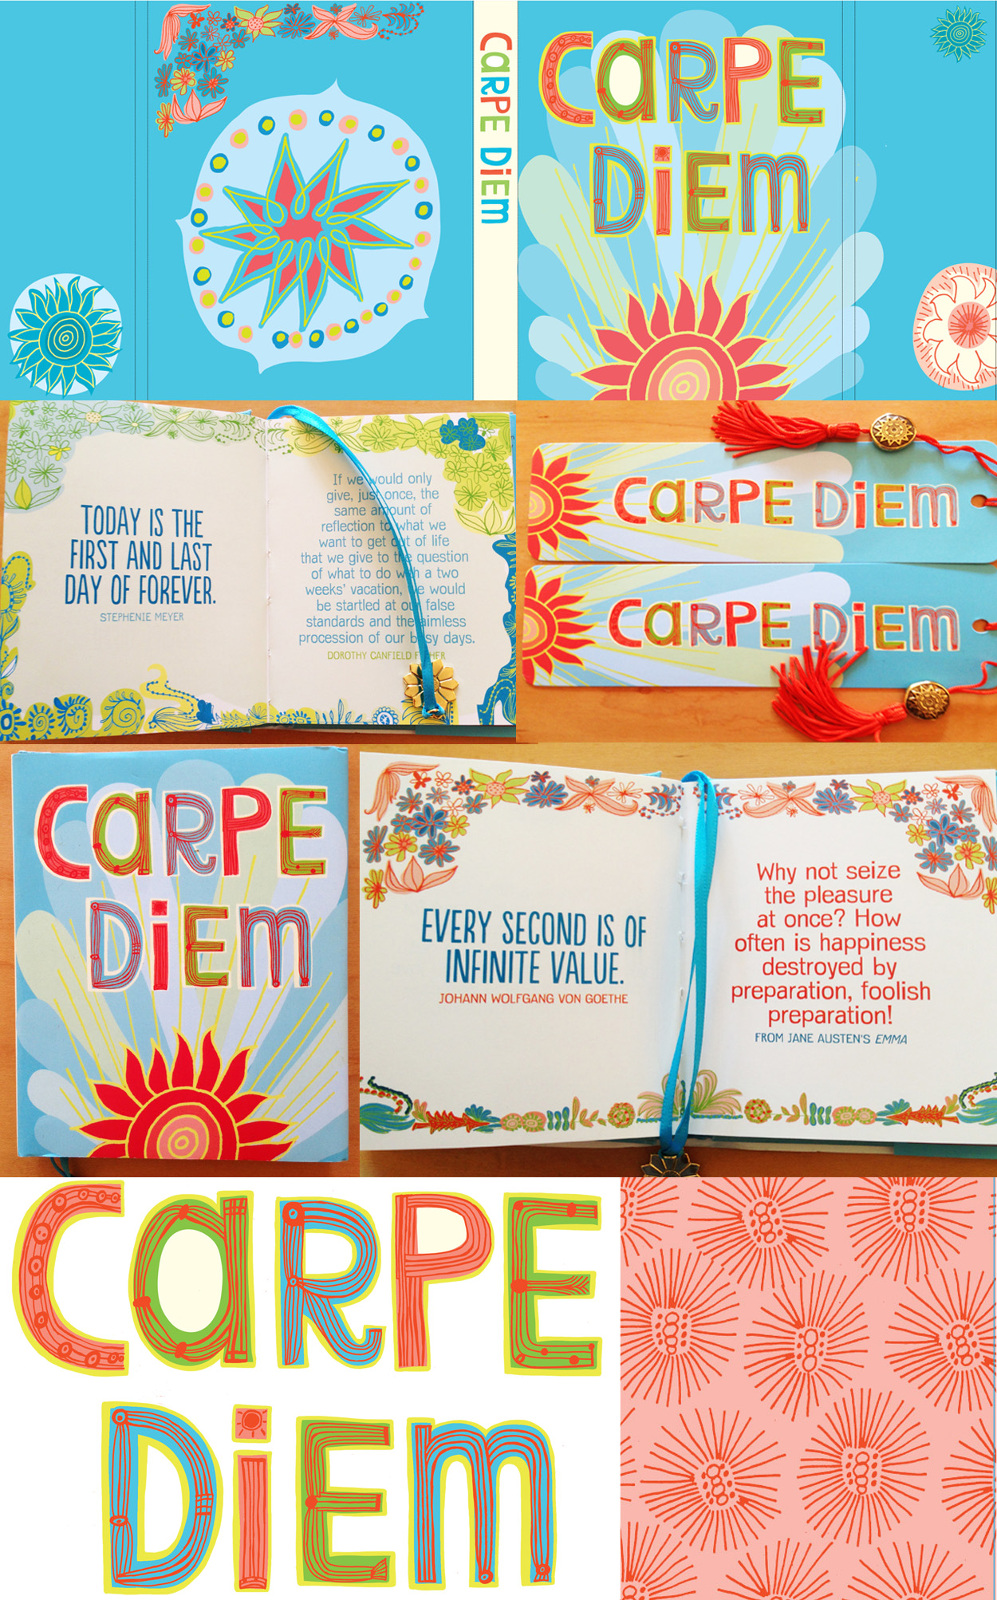 new mini-book "Carpe Diem"